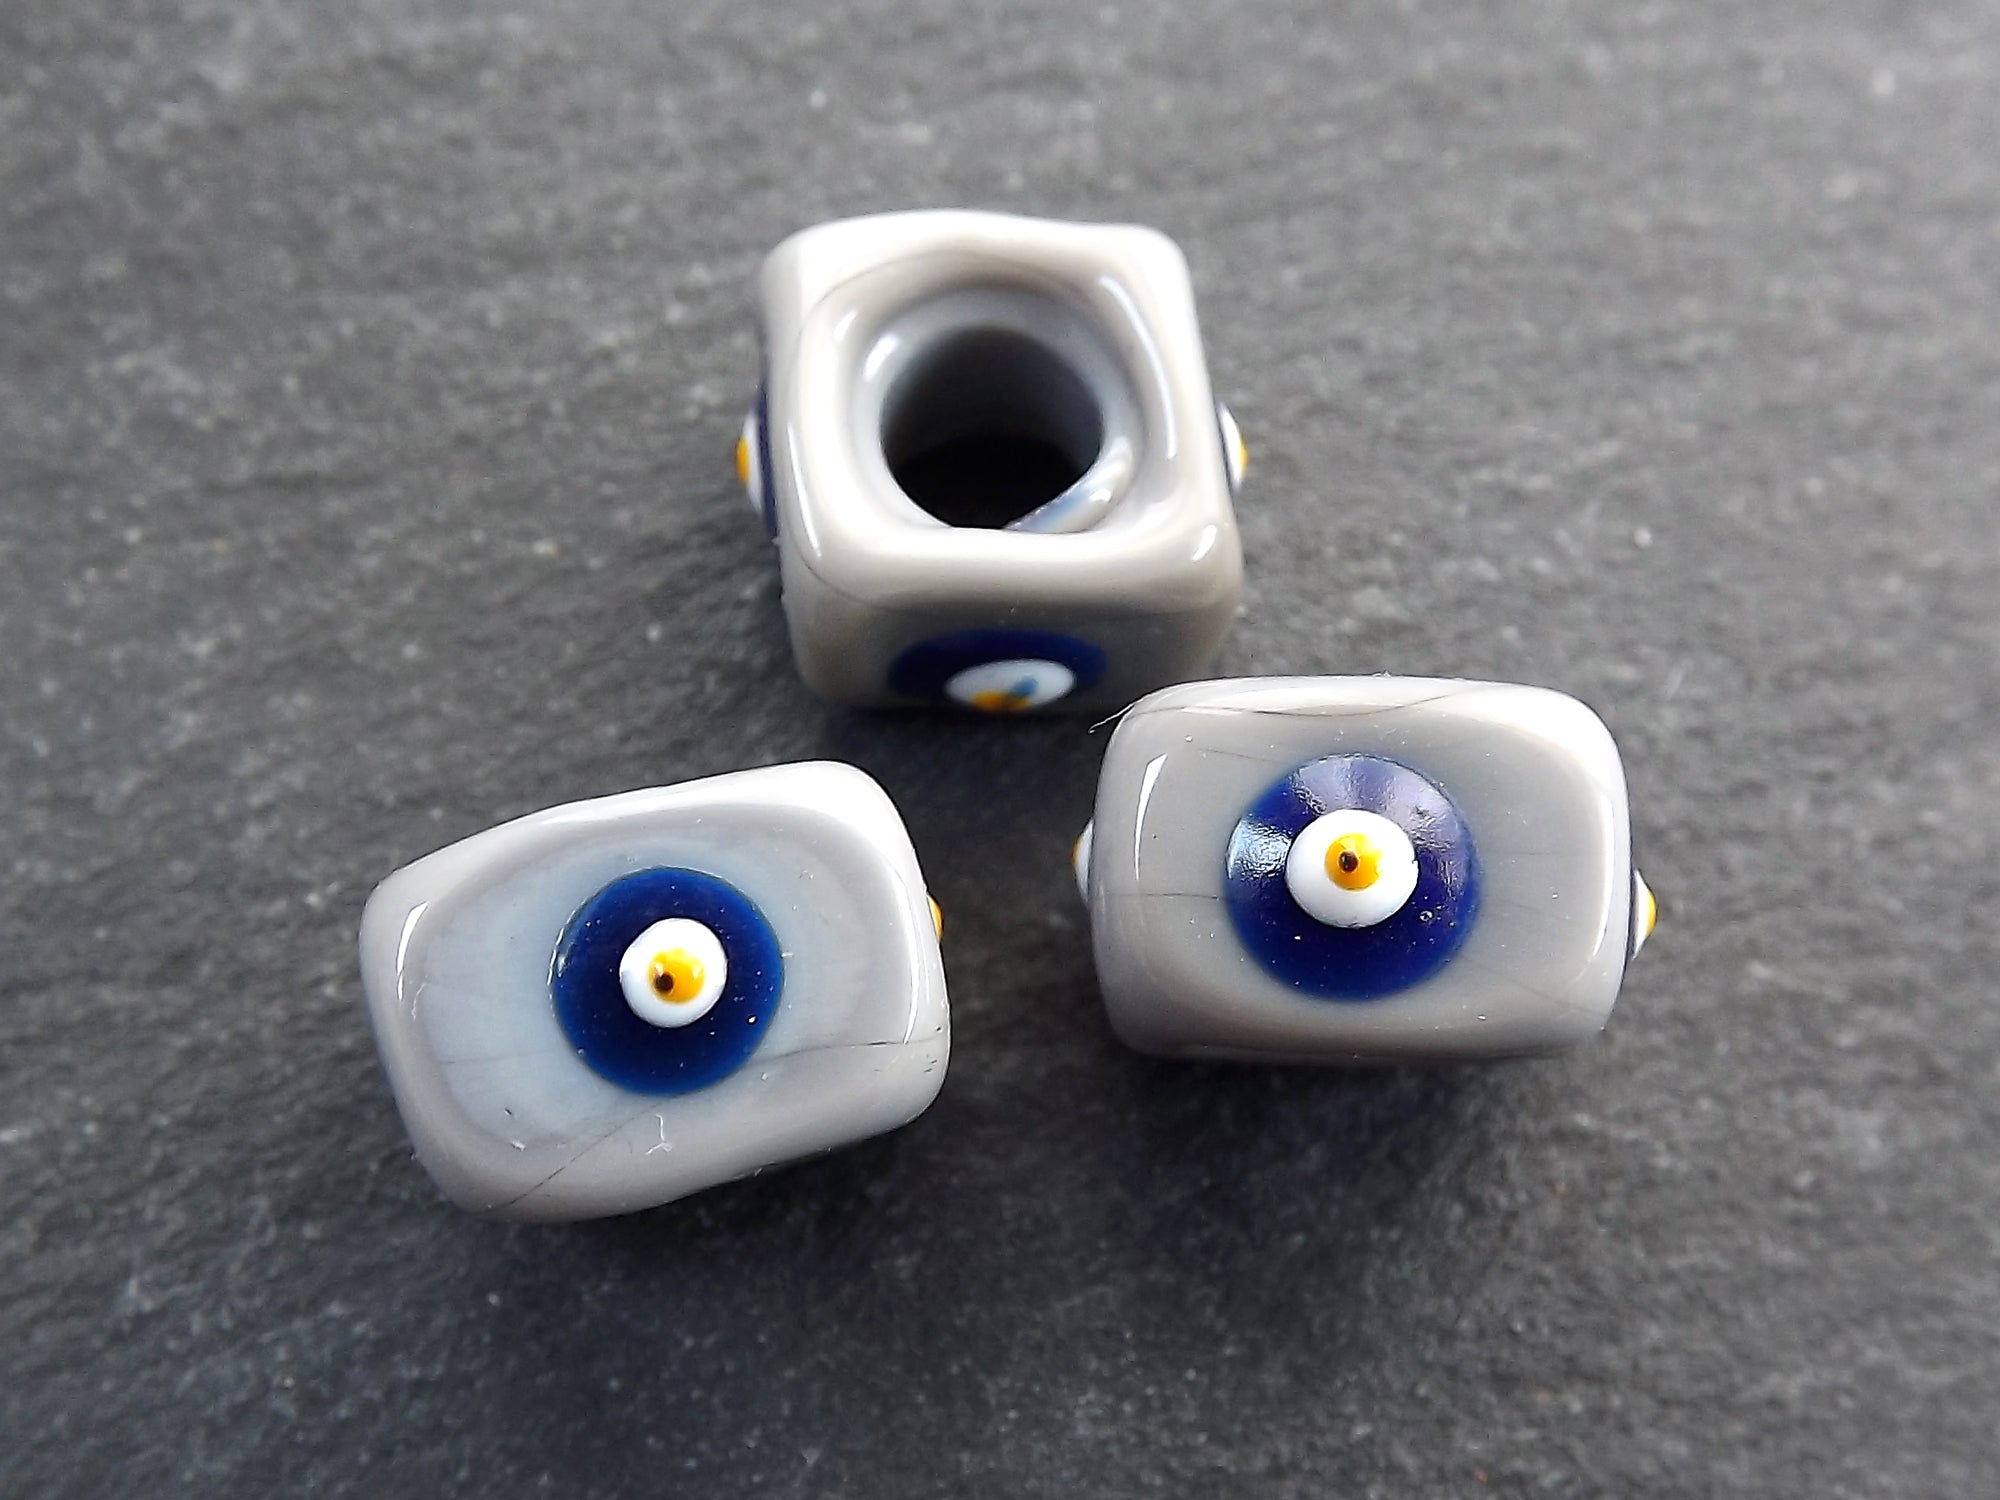 Gray Square Evil Eye Beads, Protective Turkish Nazar, Good Luck Bead, 10mm, 3pc